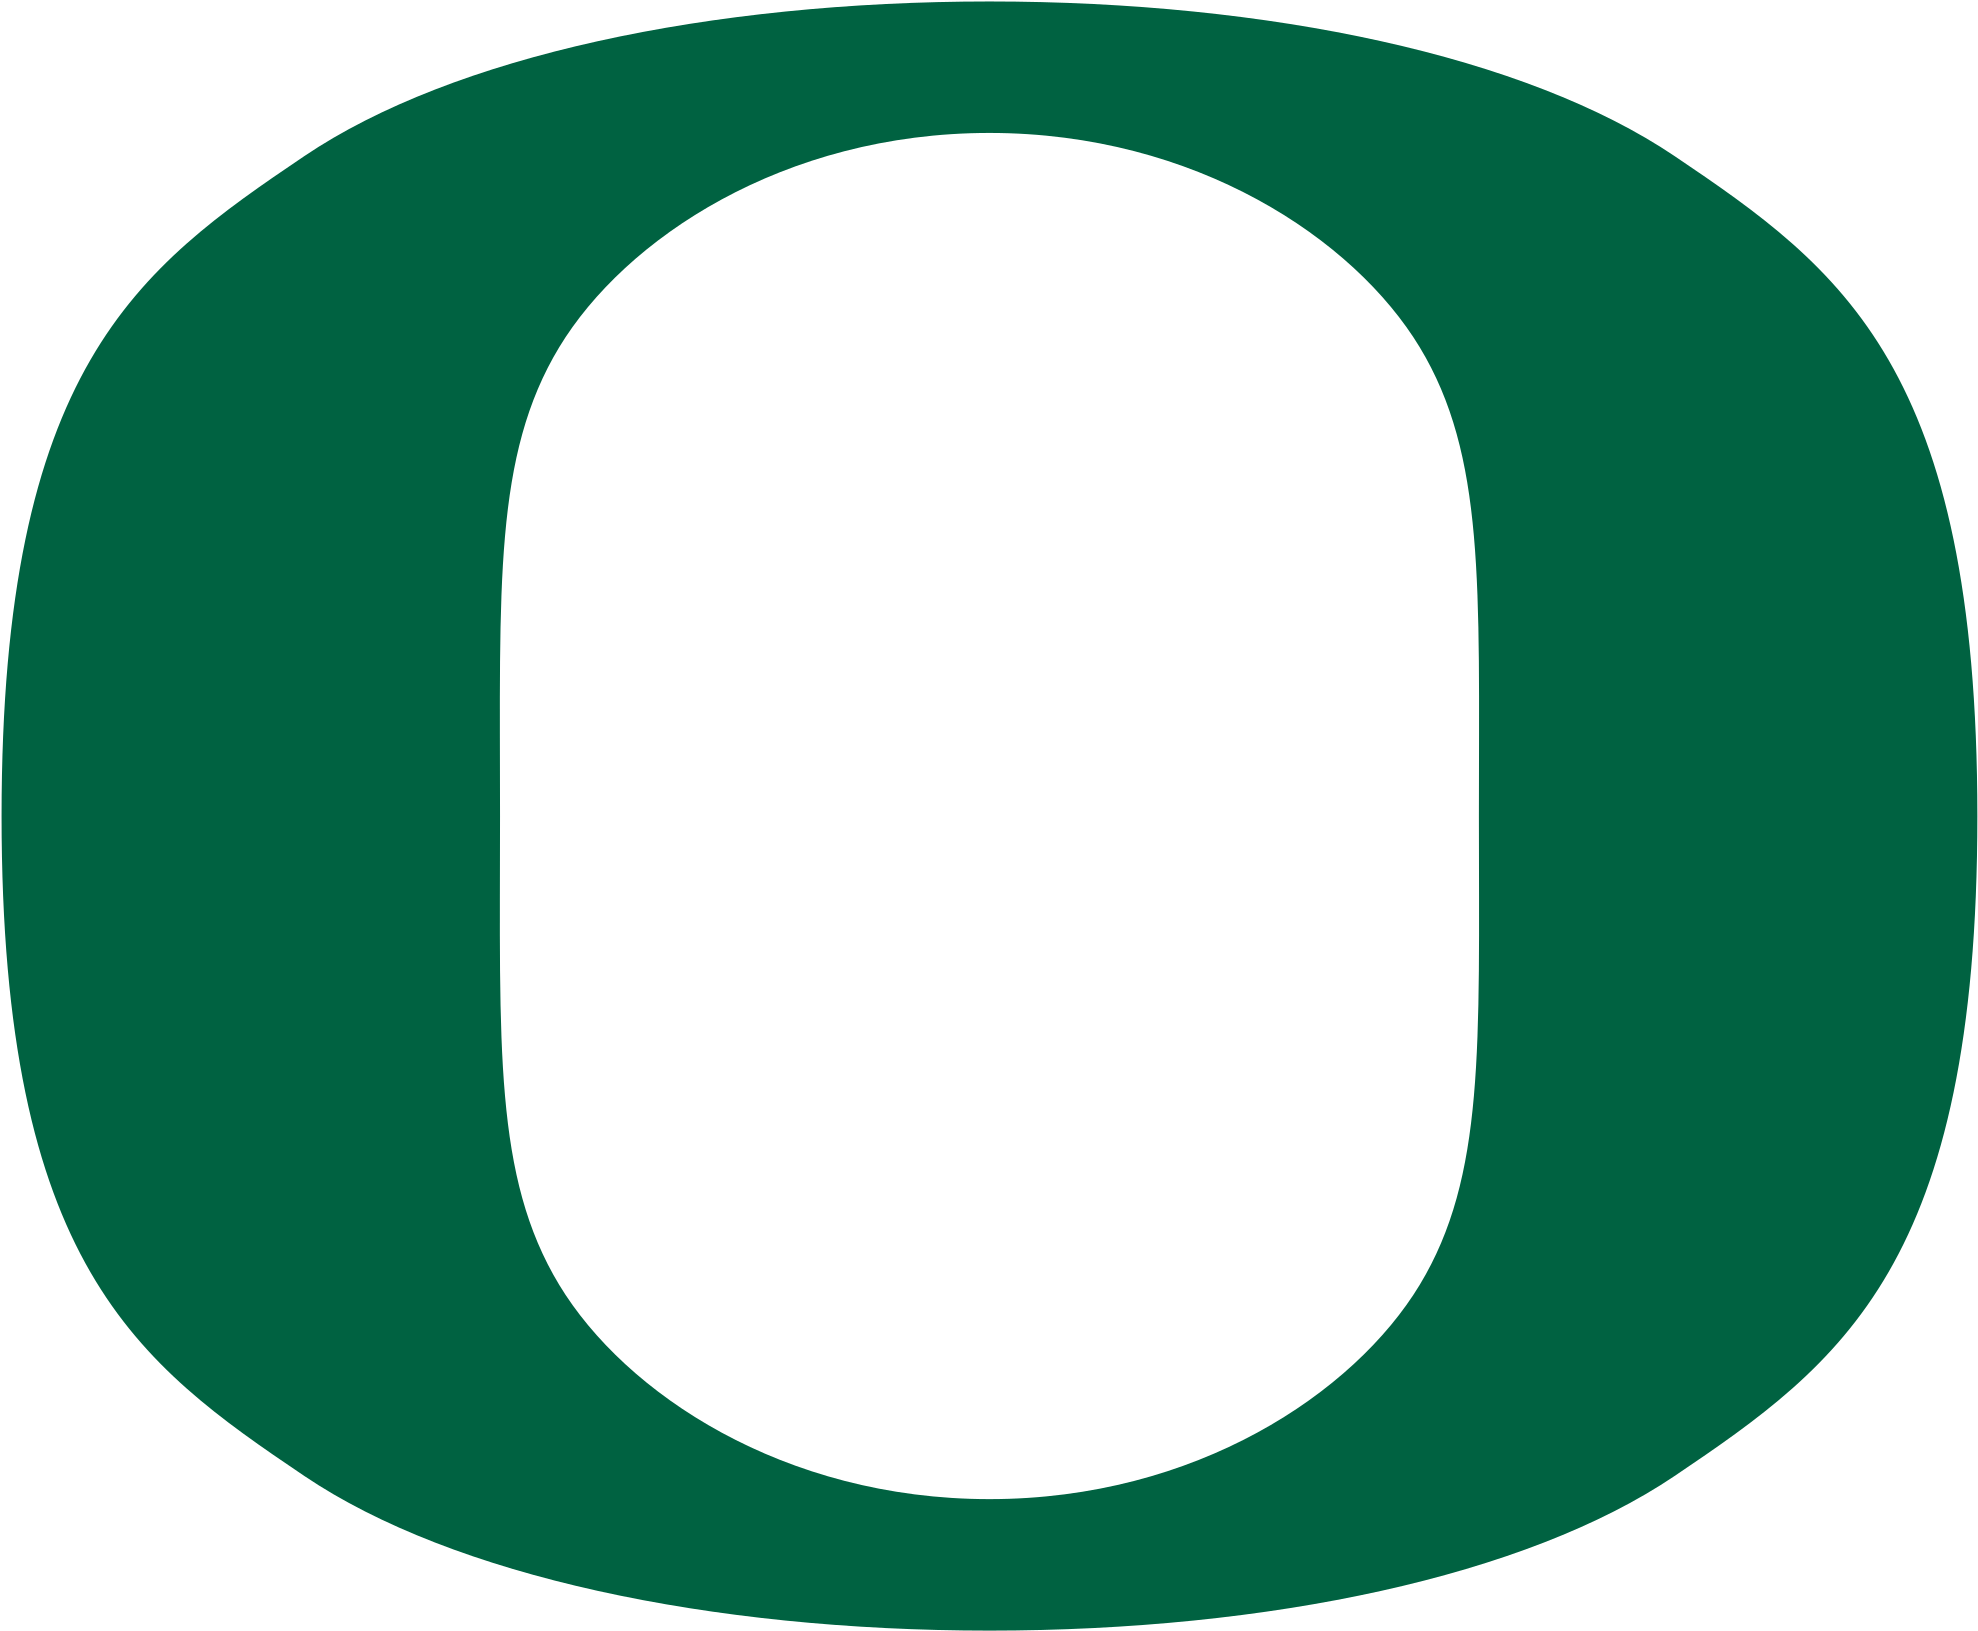 Oregon Ducks Logo PNG Image with No